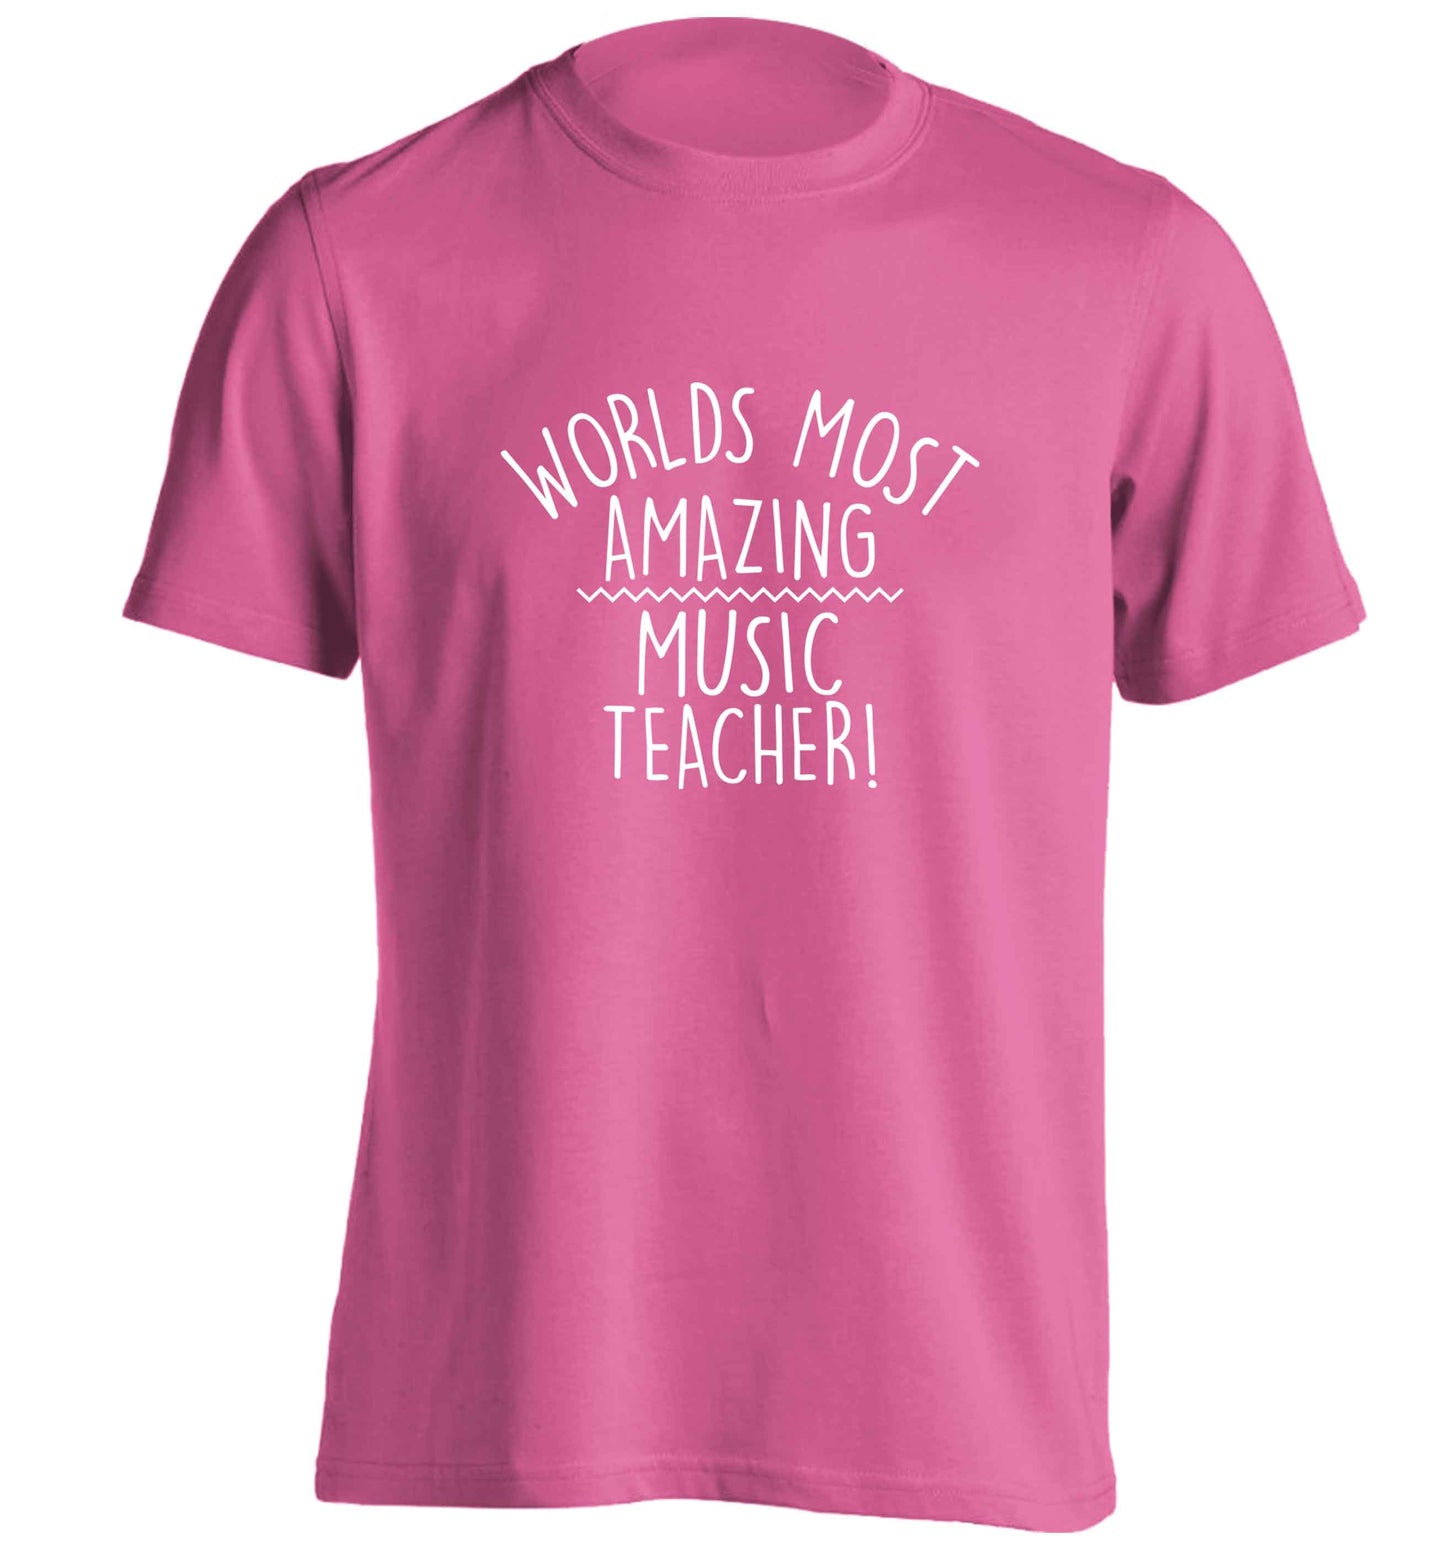 Worlds most amazing music teacher adults unisex pink Tshirt 2XL